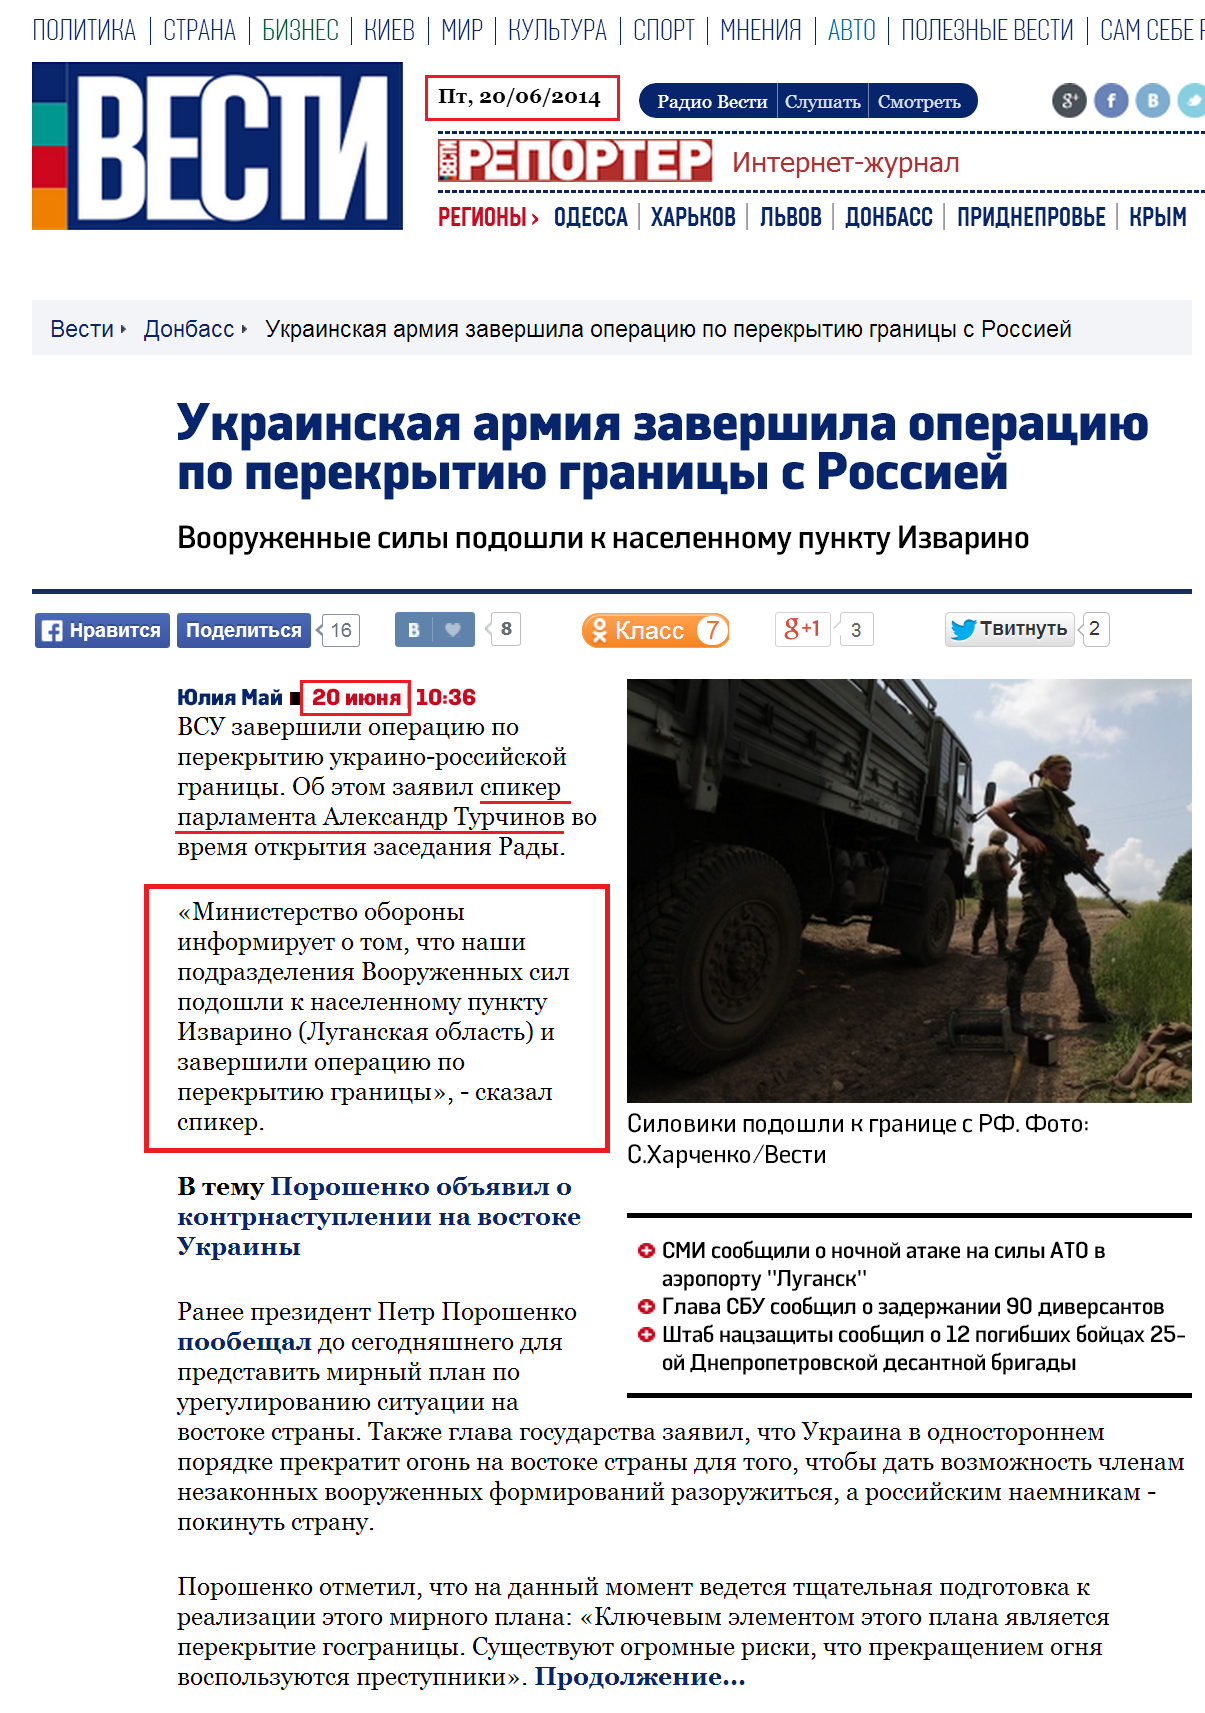 http://vesti.ua/donbass/57560-ukrainskaja-armija-zavershila-operaciju-po-perekrytiju-granicy-s-rossiej